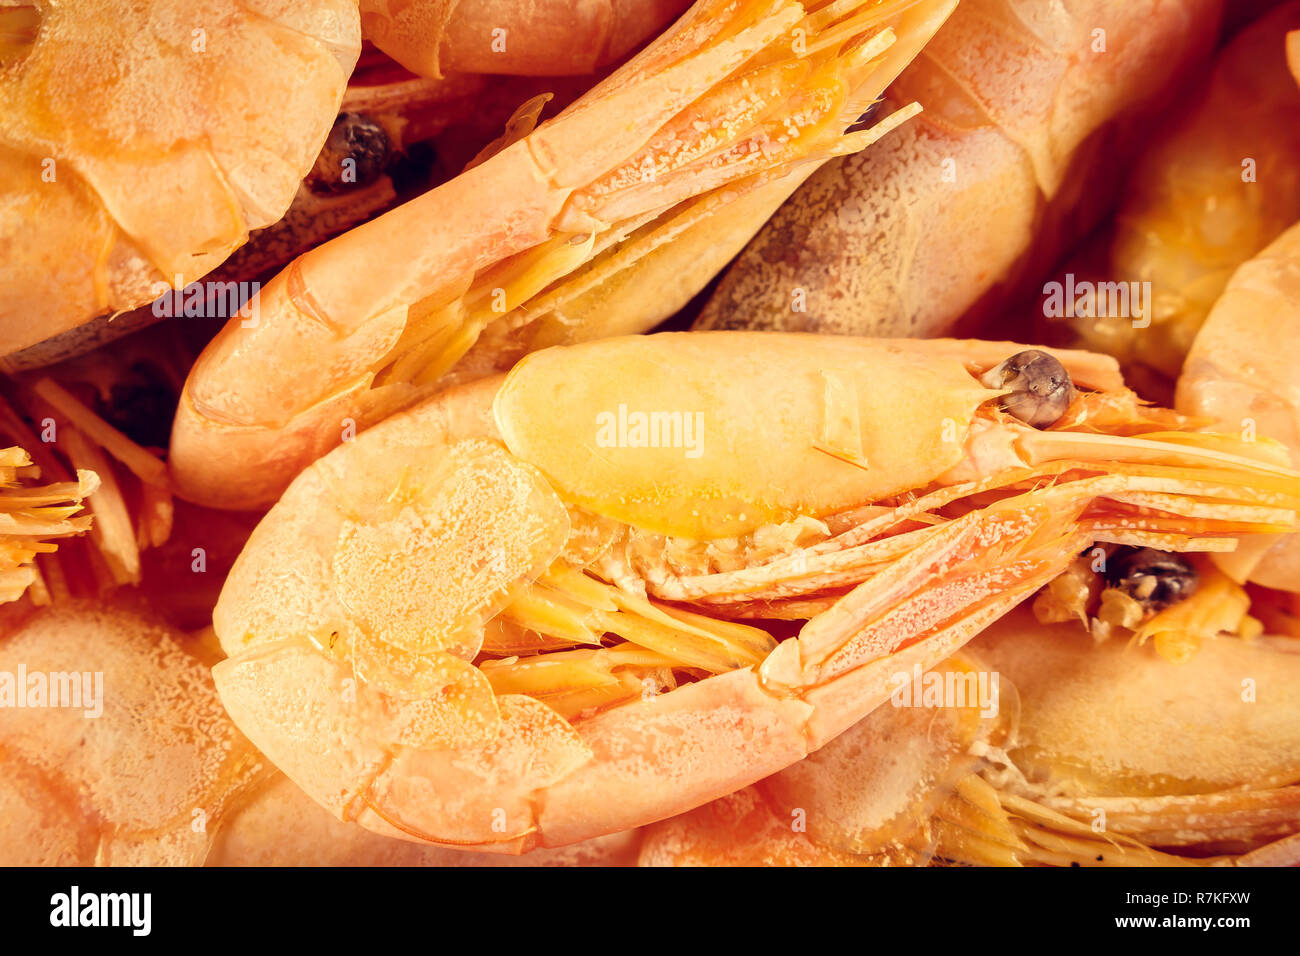 Shrimp red ready. Boiled shrimp pile. Close-up Stock Photo